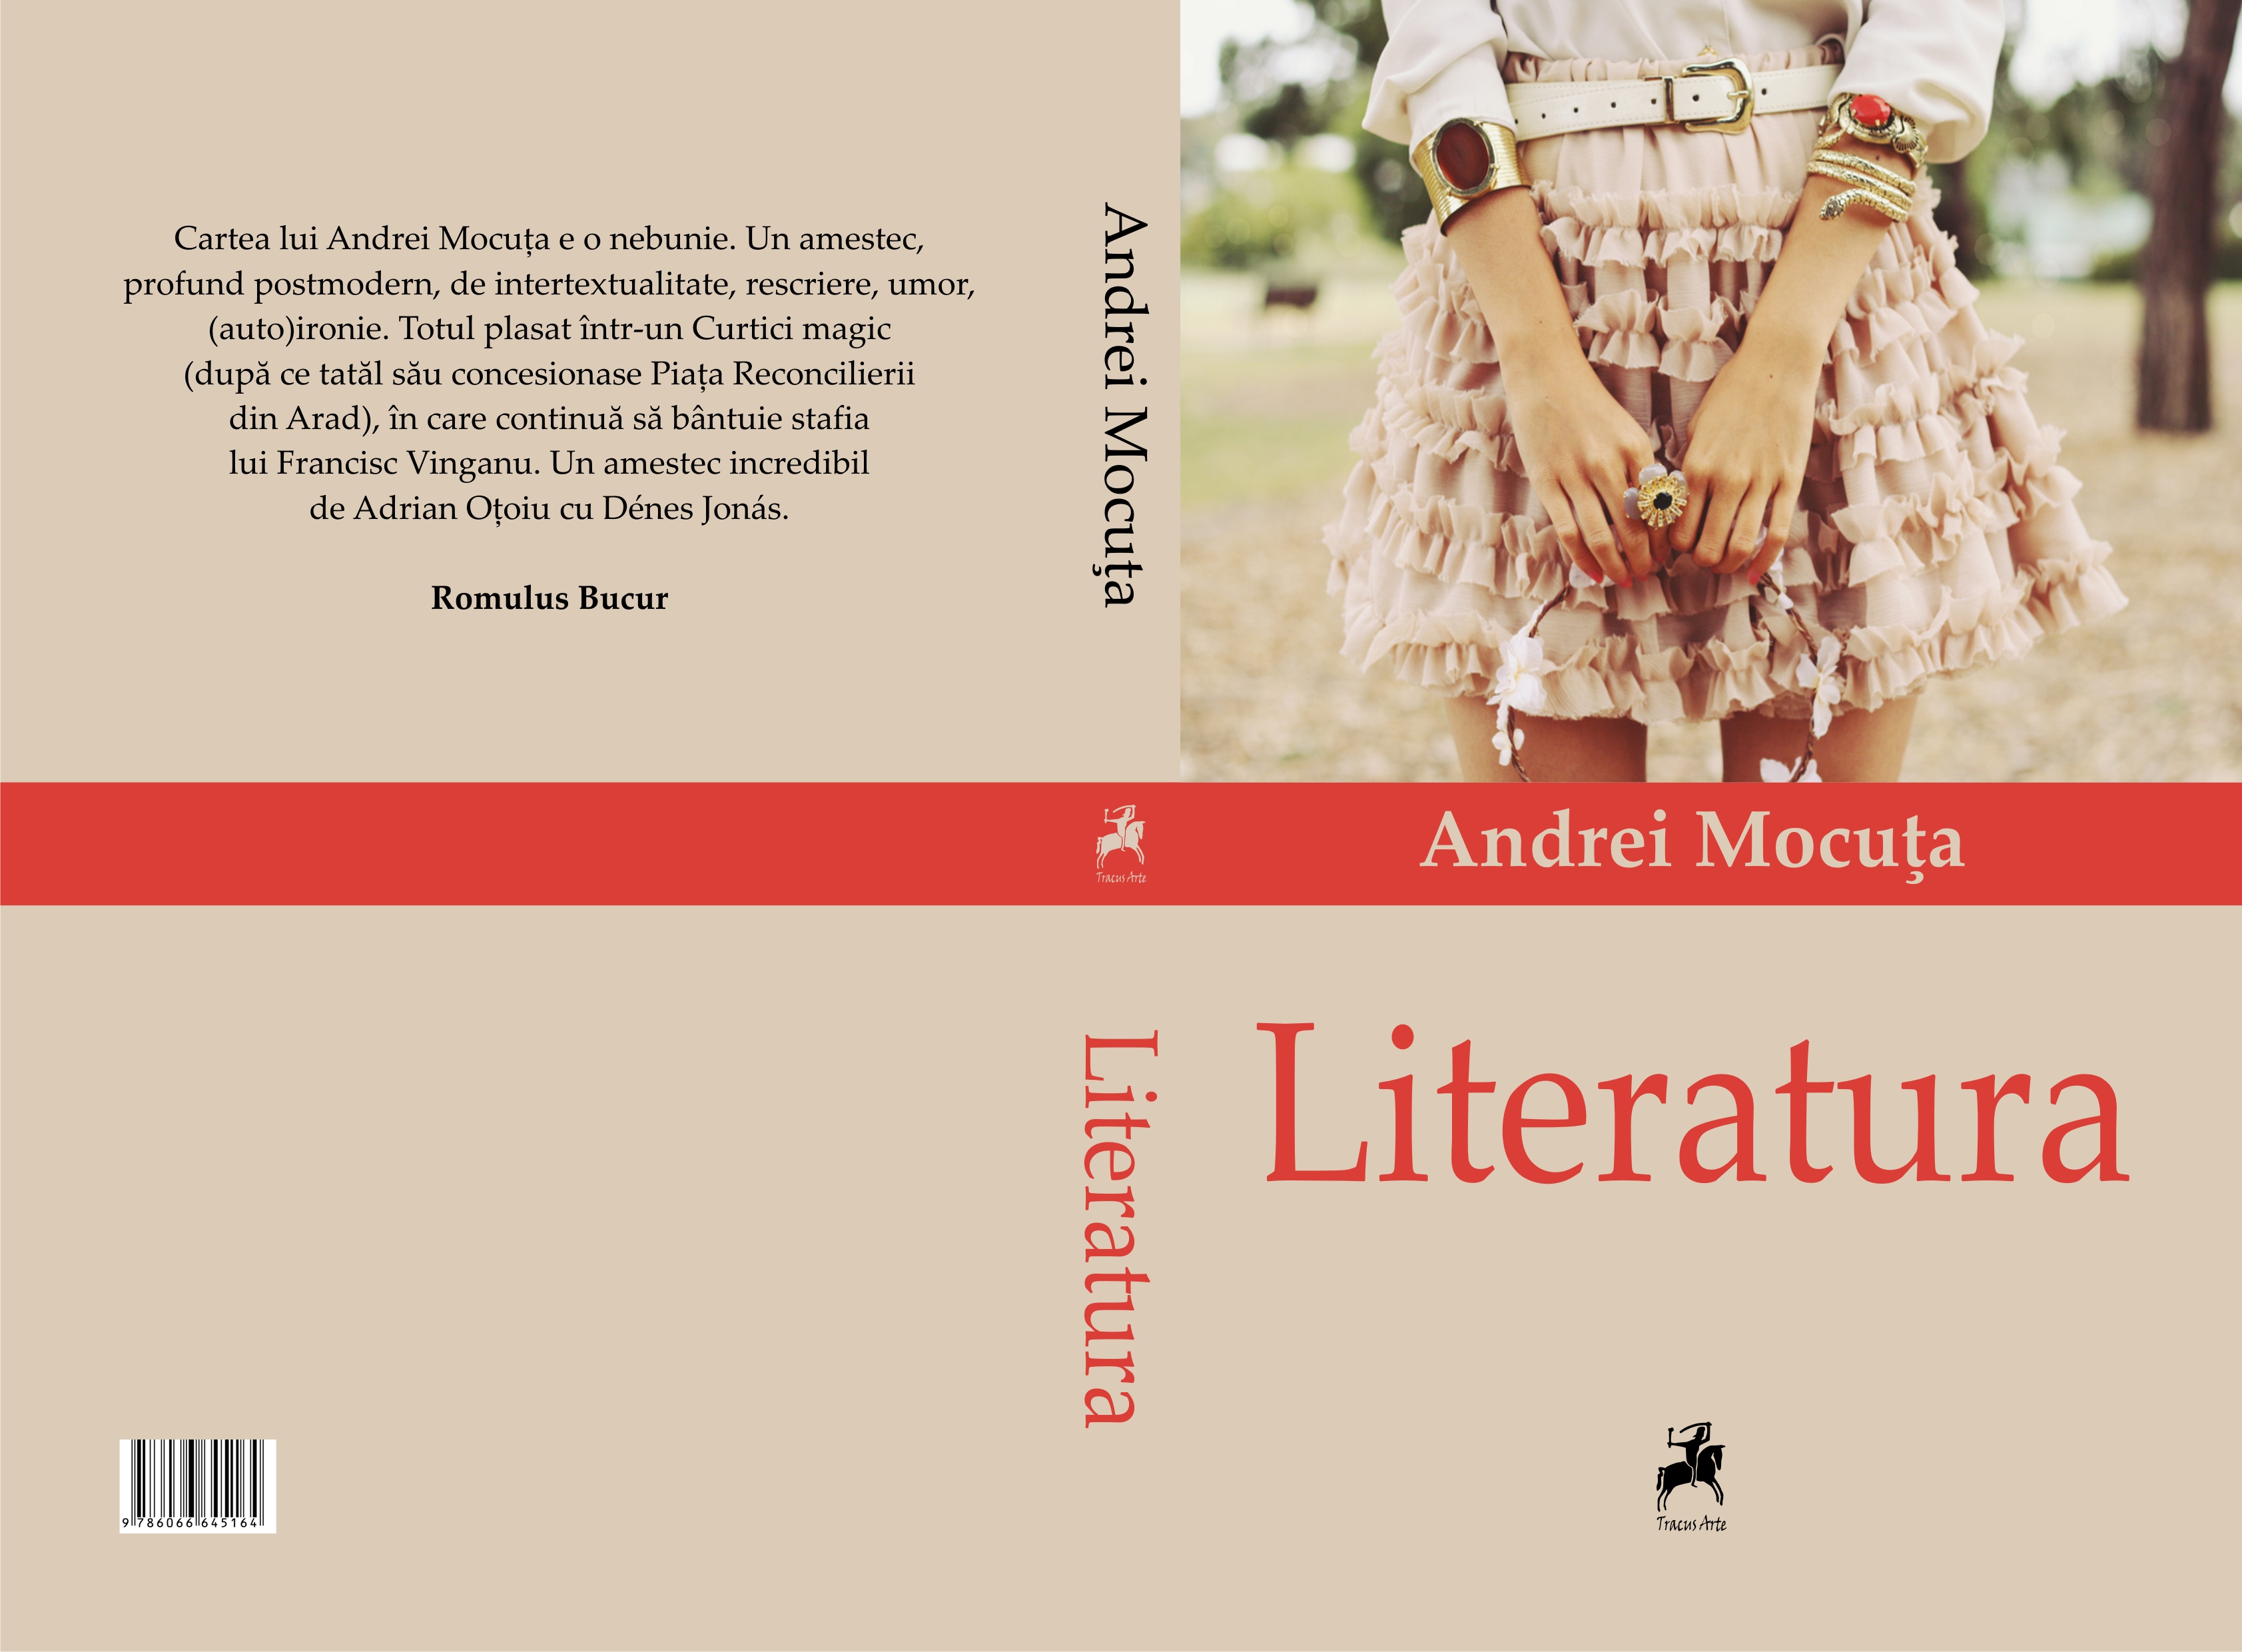 Literatura - Andrei Mocuta